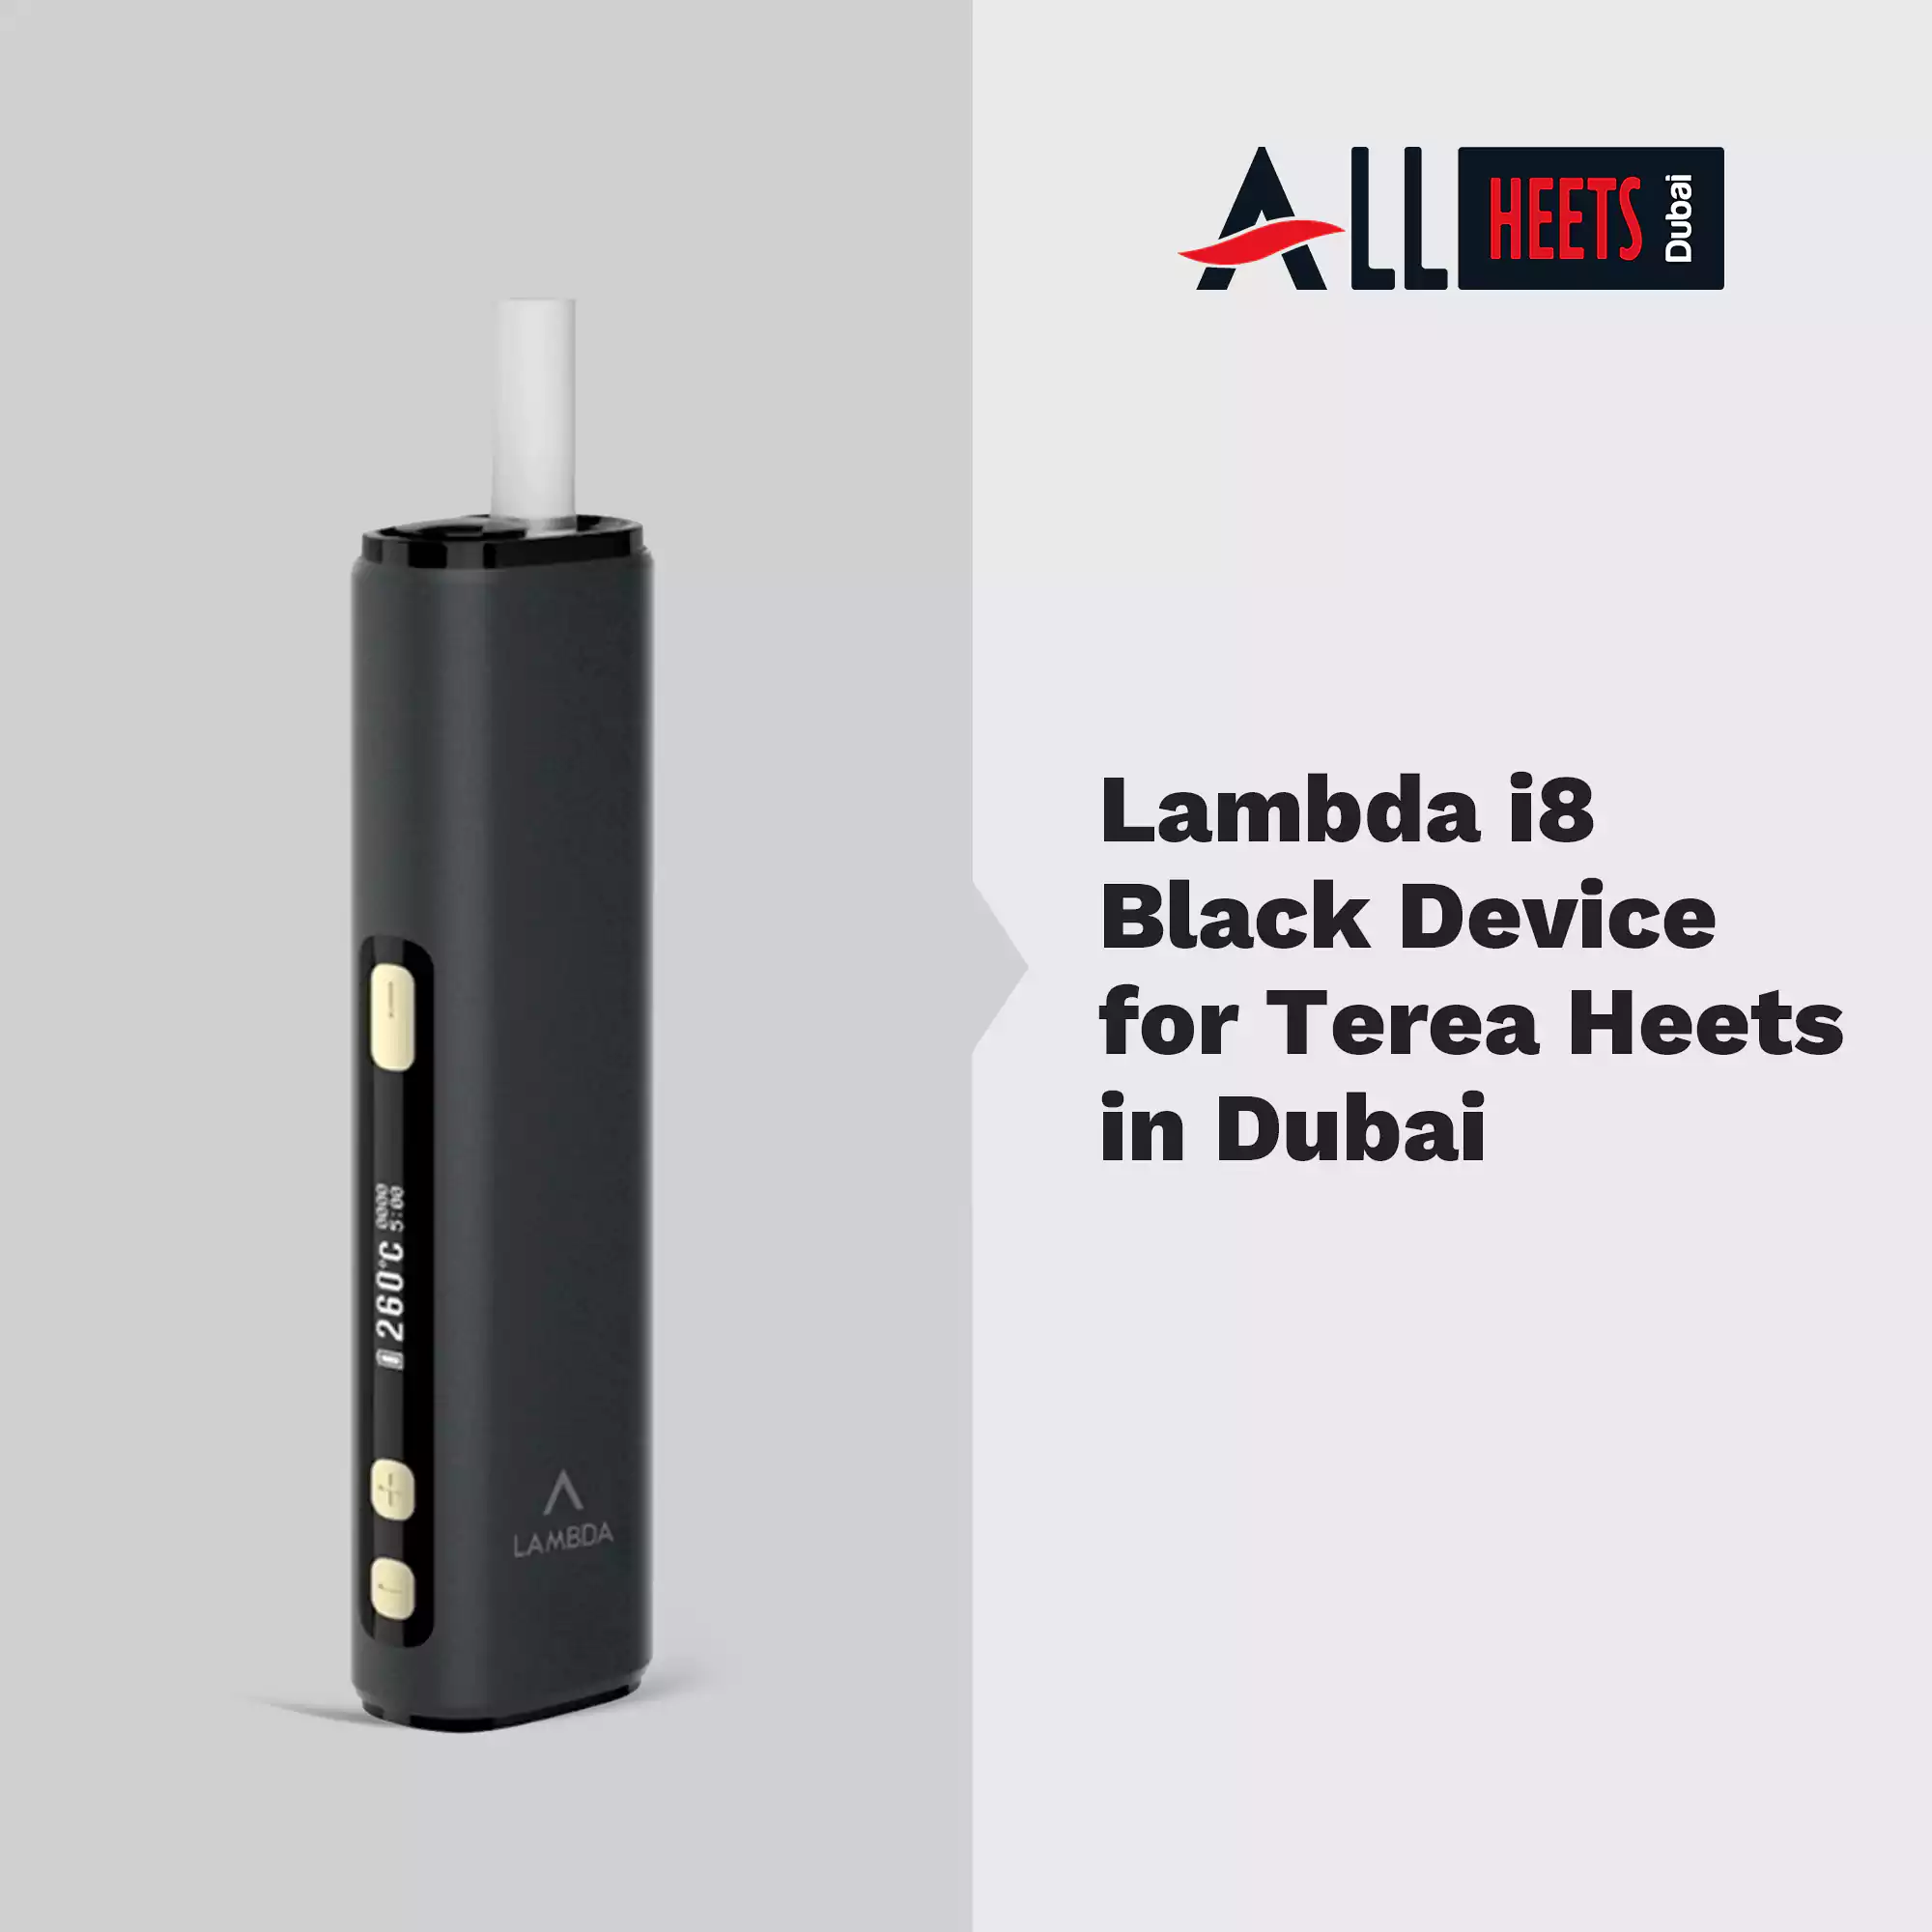 LAMBDA CC OLED HD Display Heat Not Burn Tobacco Heating Device